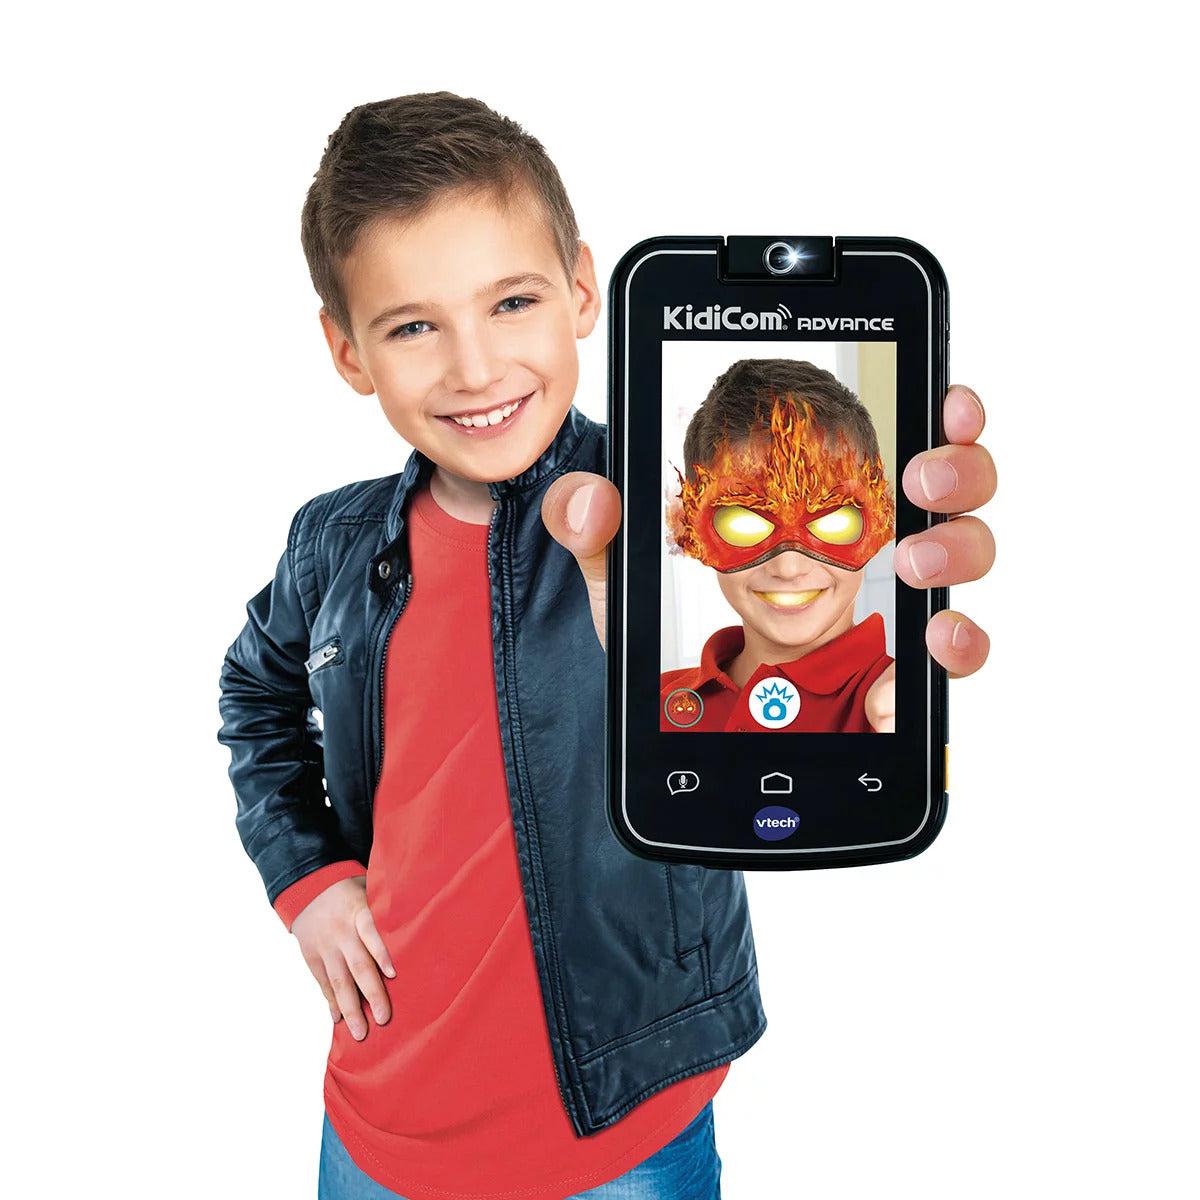 Vtech Kidicom Advance Smart Device For Kids, 5